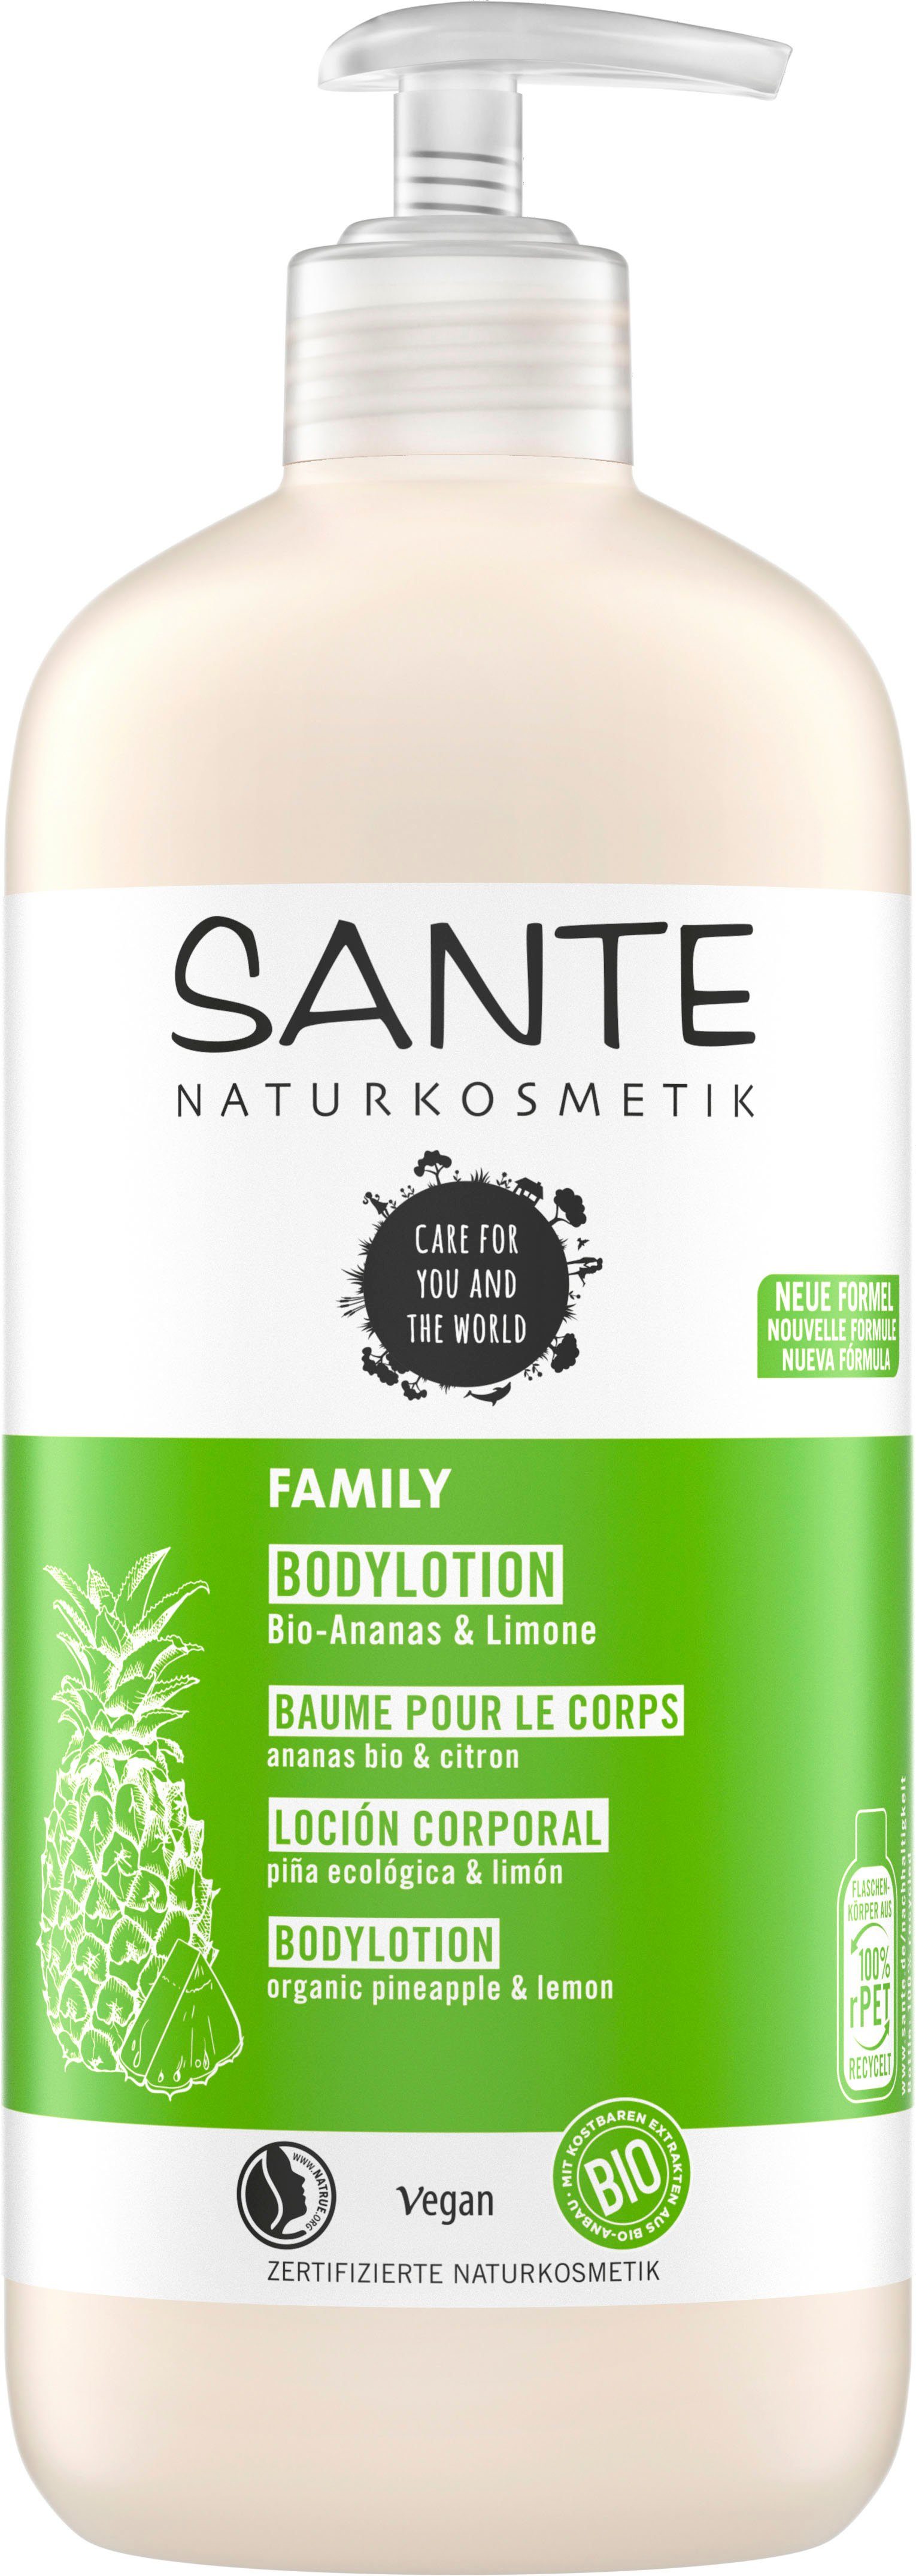 [Kostenloser Versand landesweit] SANTE Bodylotion Family Sante Bodylotion